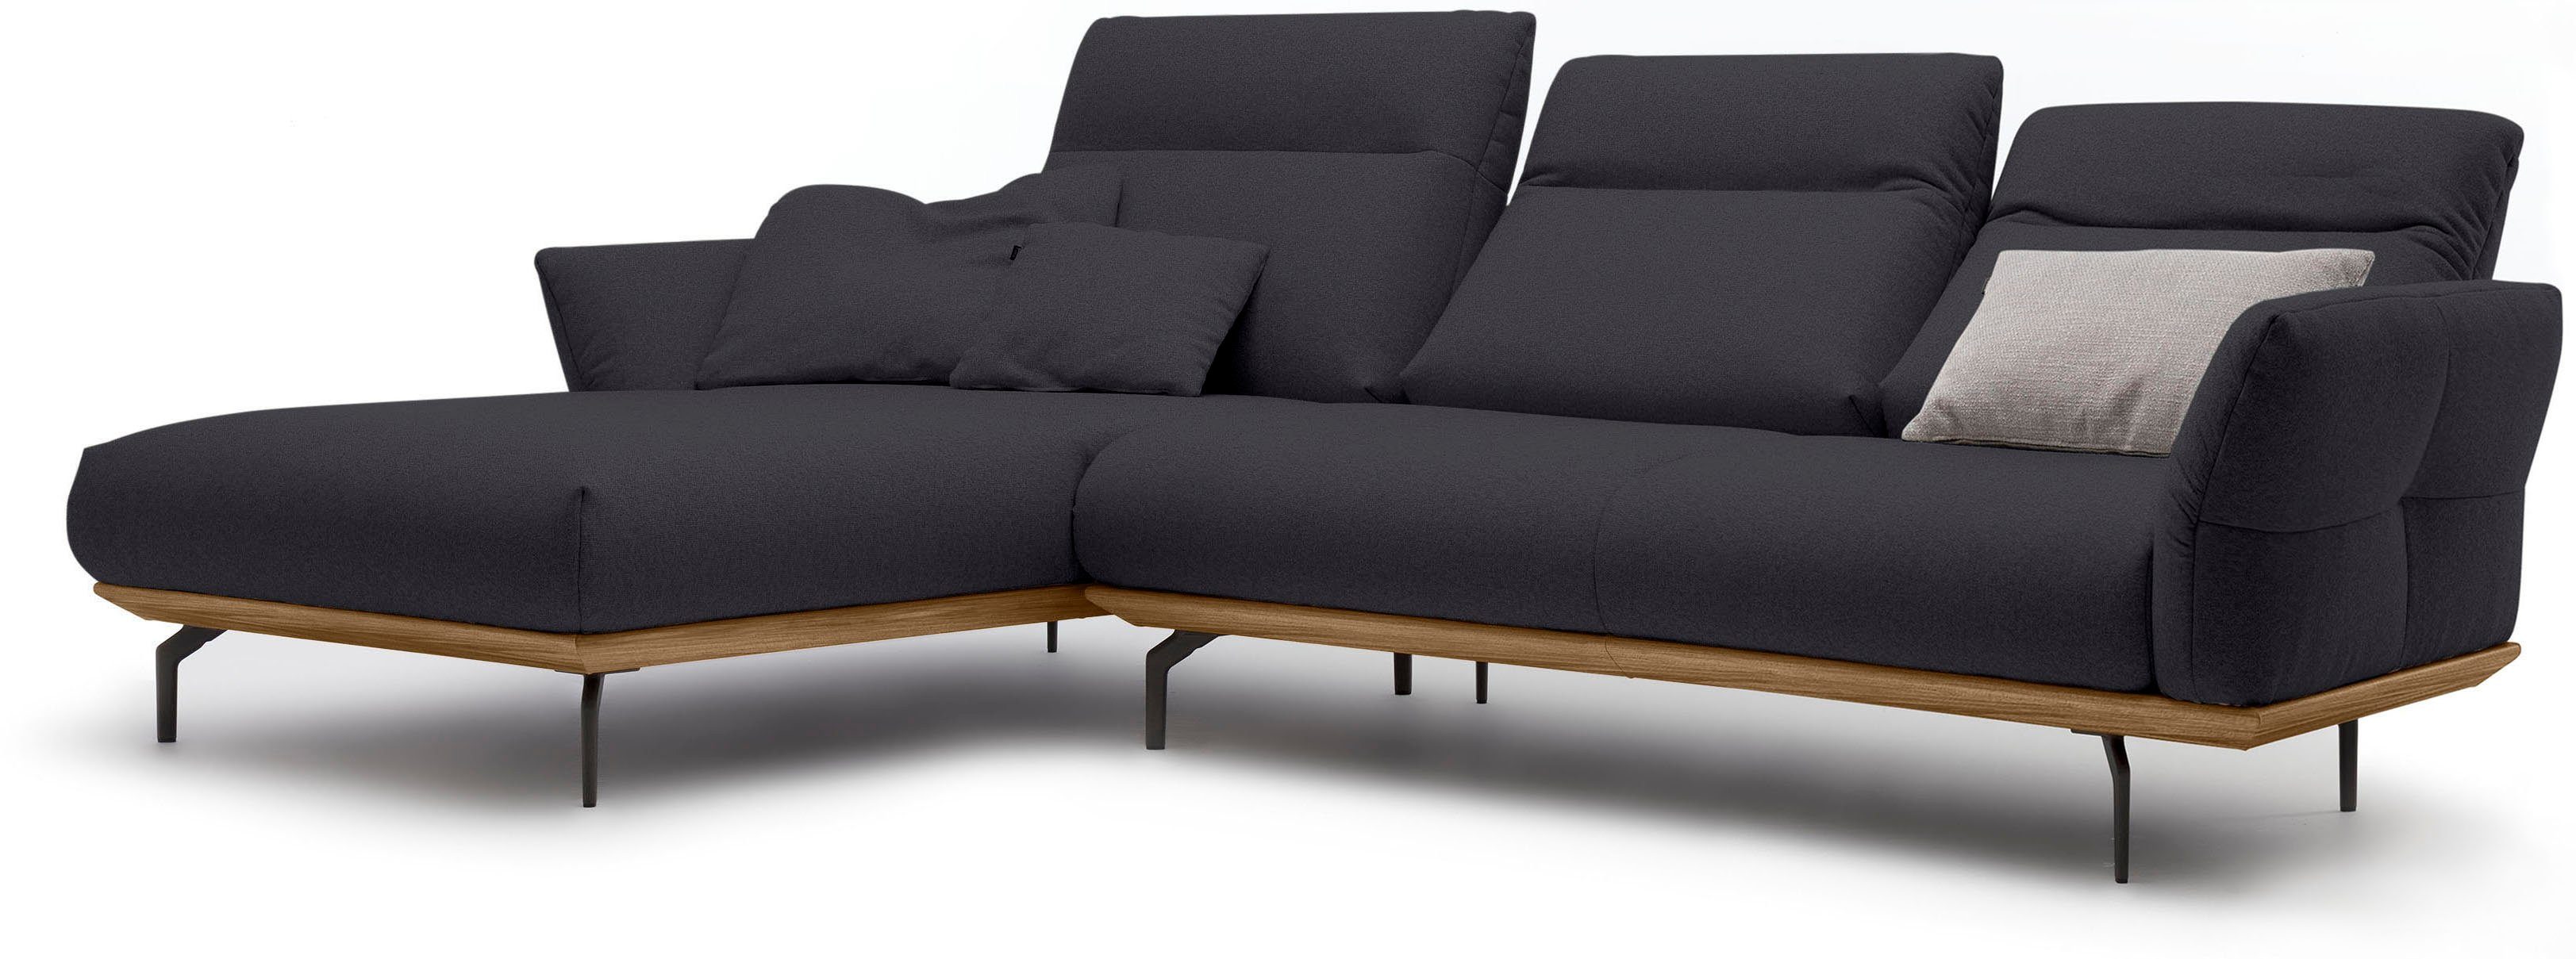 sofa 298 Nussbaum, hülsta Ecksofa hs.460, in Breite Umbragrau, Sockel in Winkelfüße cm